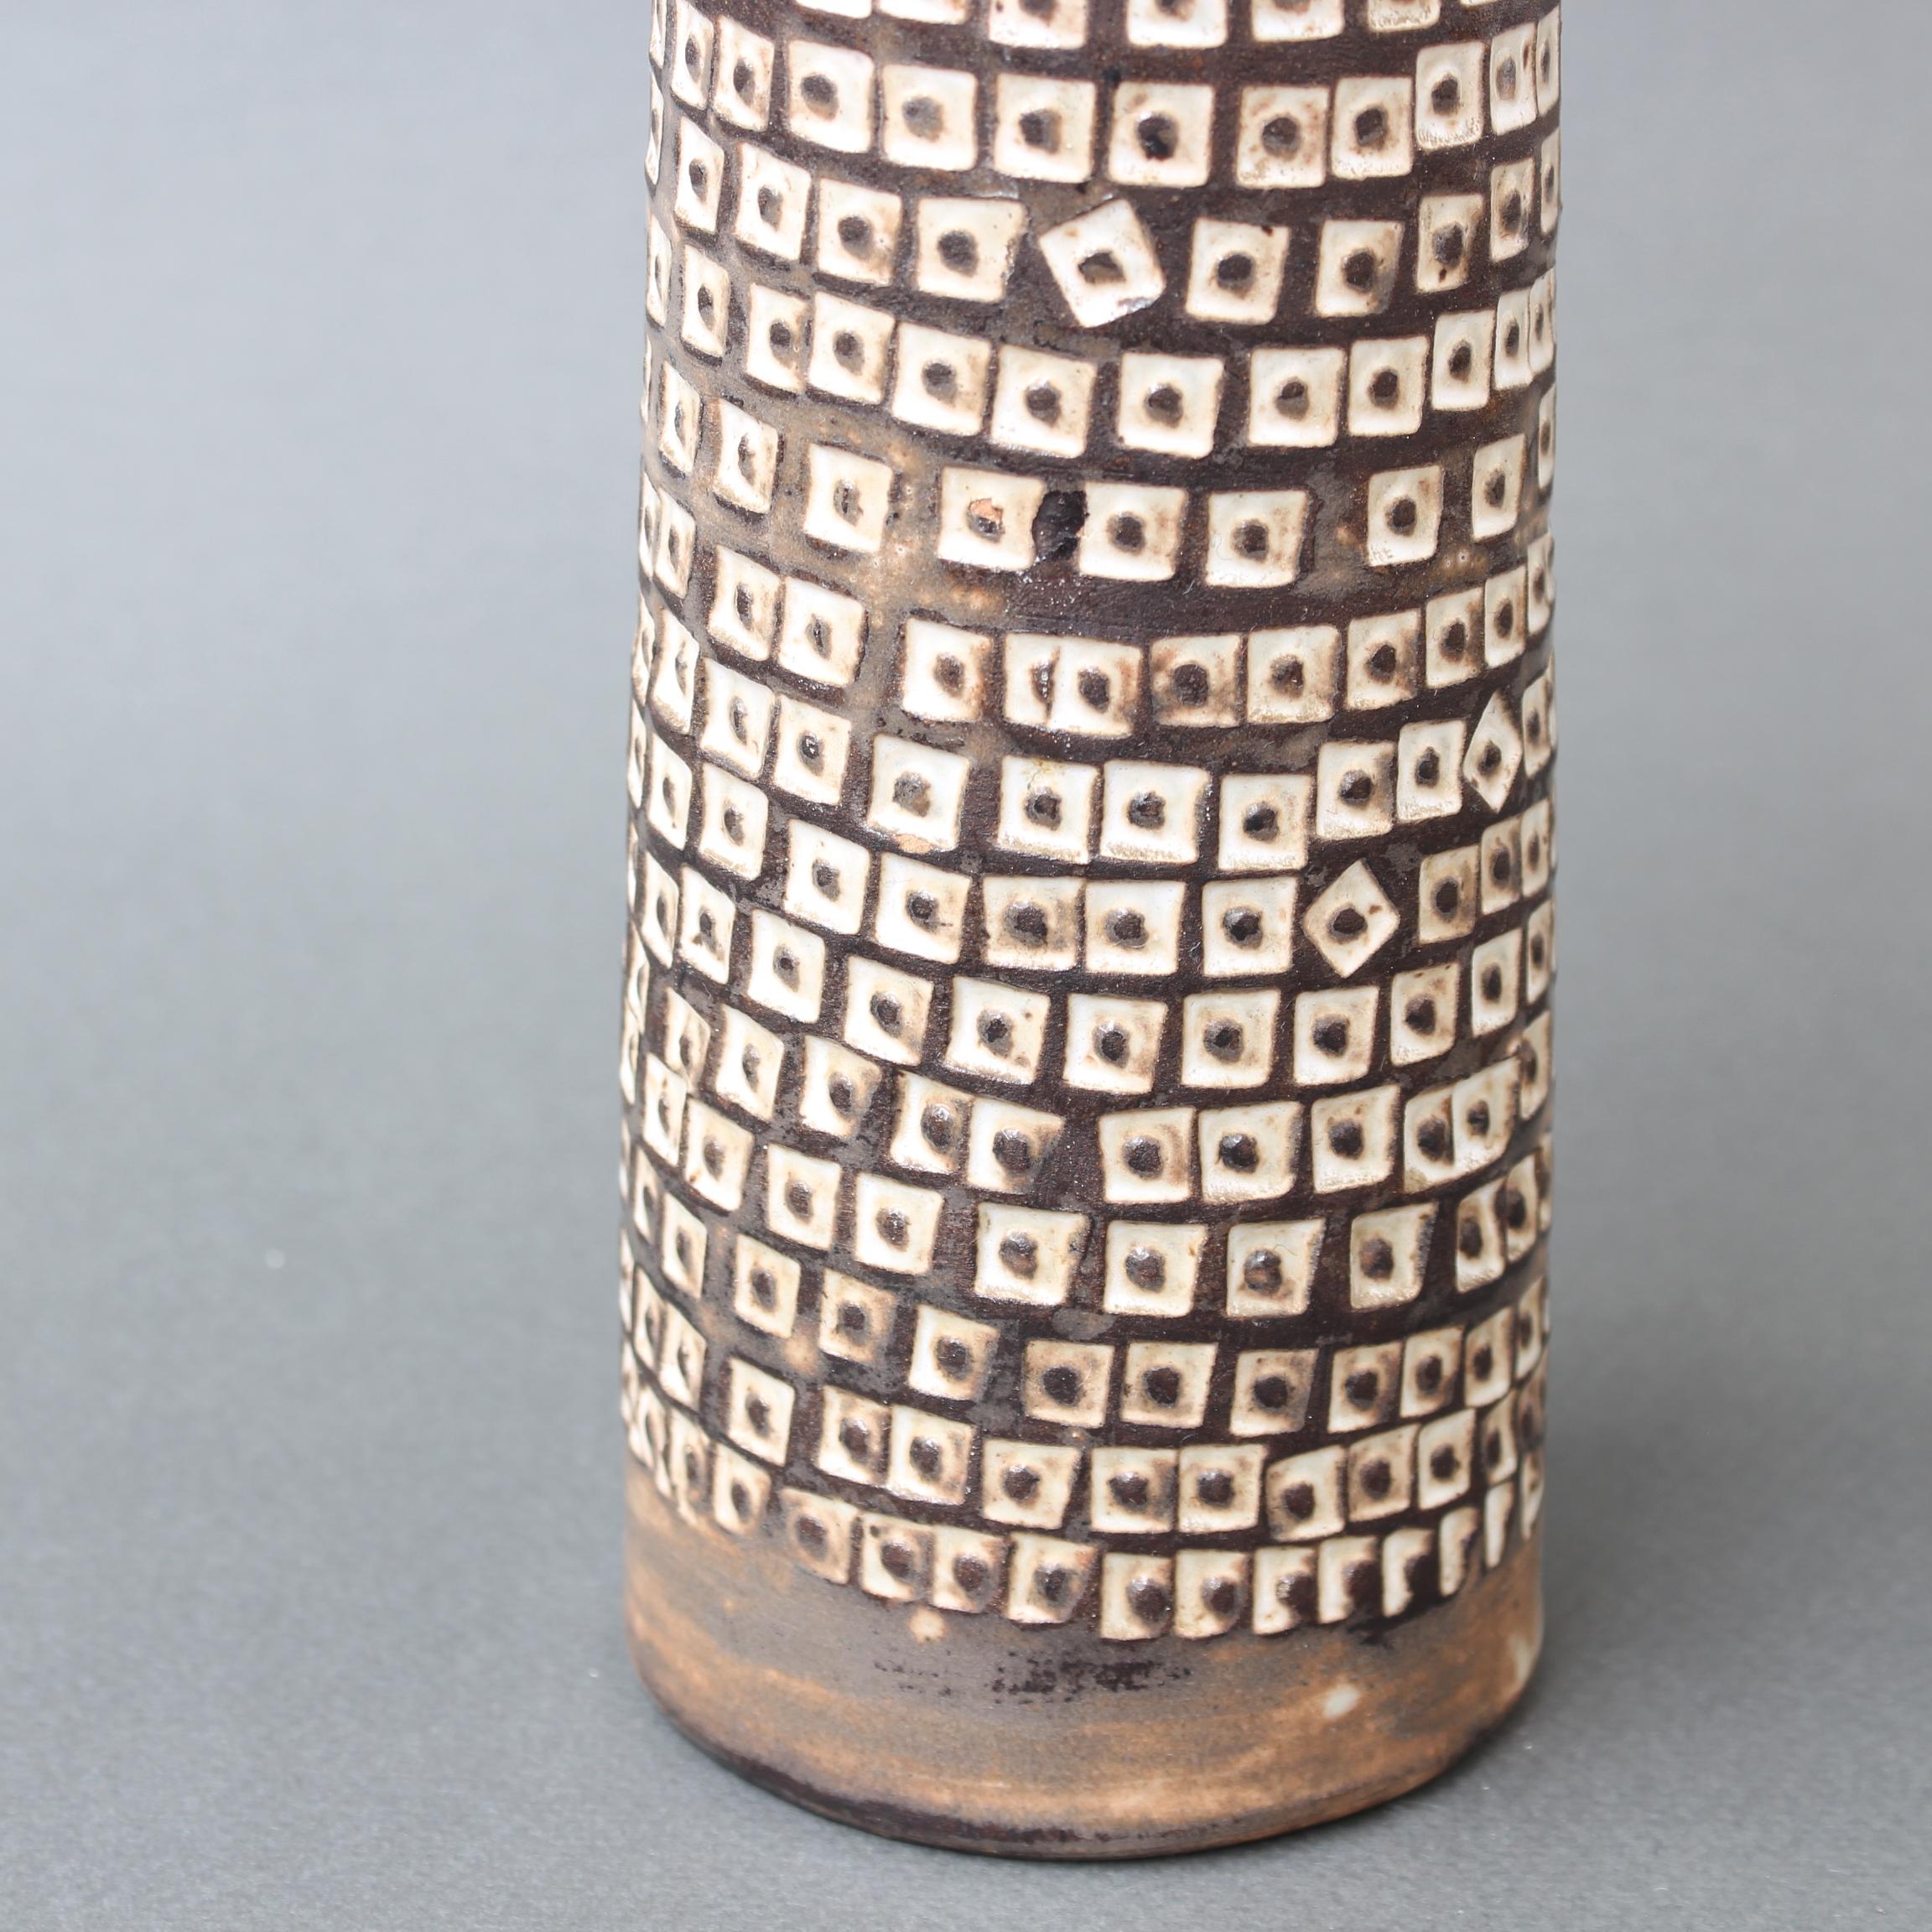 Vintage French Ceramic Flower Vase by Jacques Pouchain, Atelier Dieulefit  For Sale 2